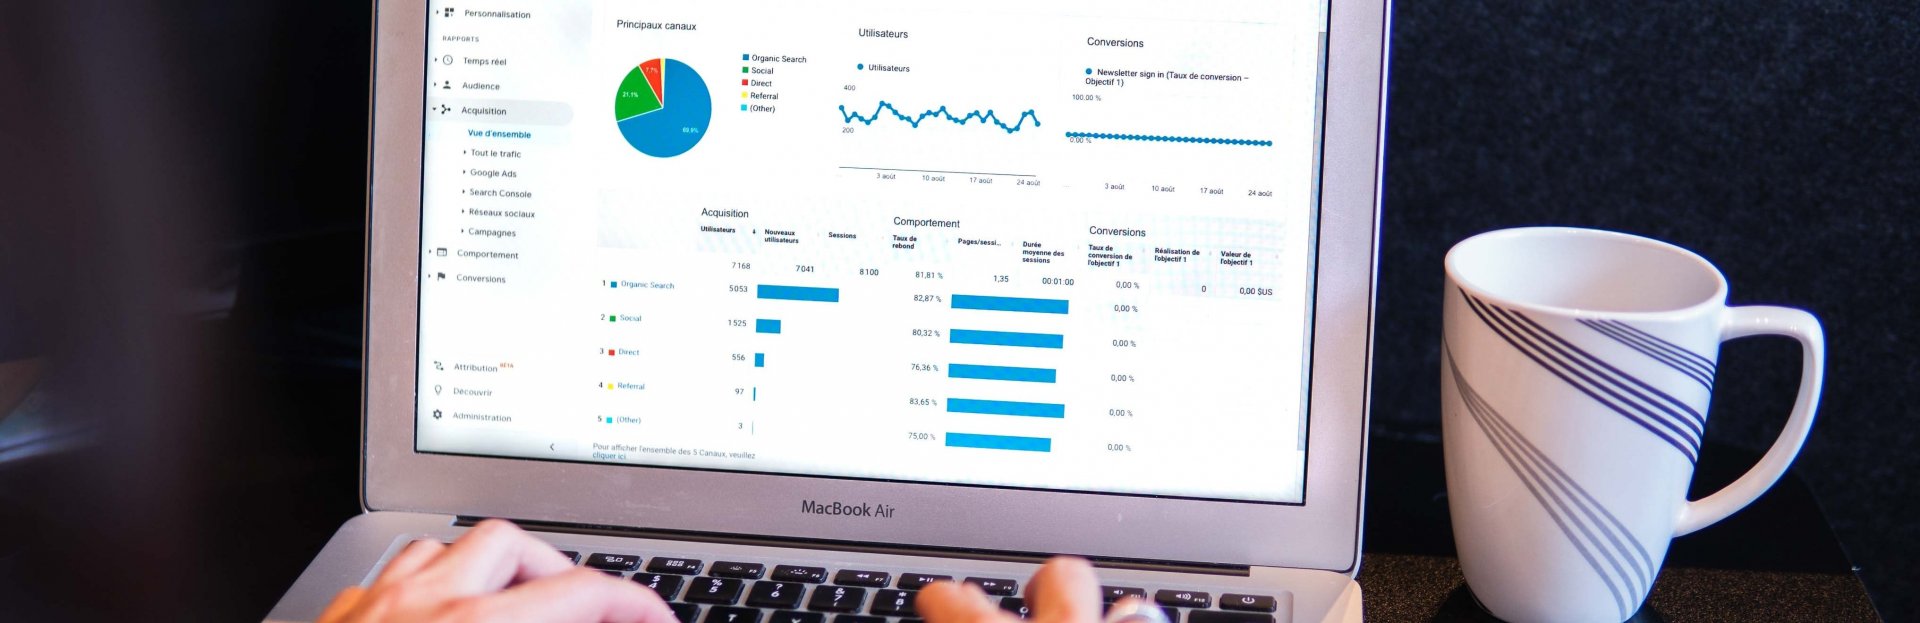 Macbook mostrando Google Analytics